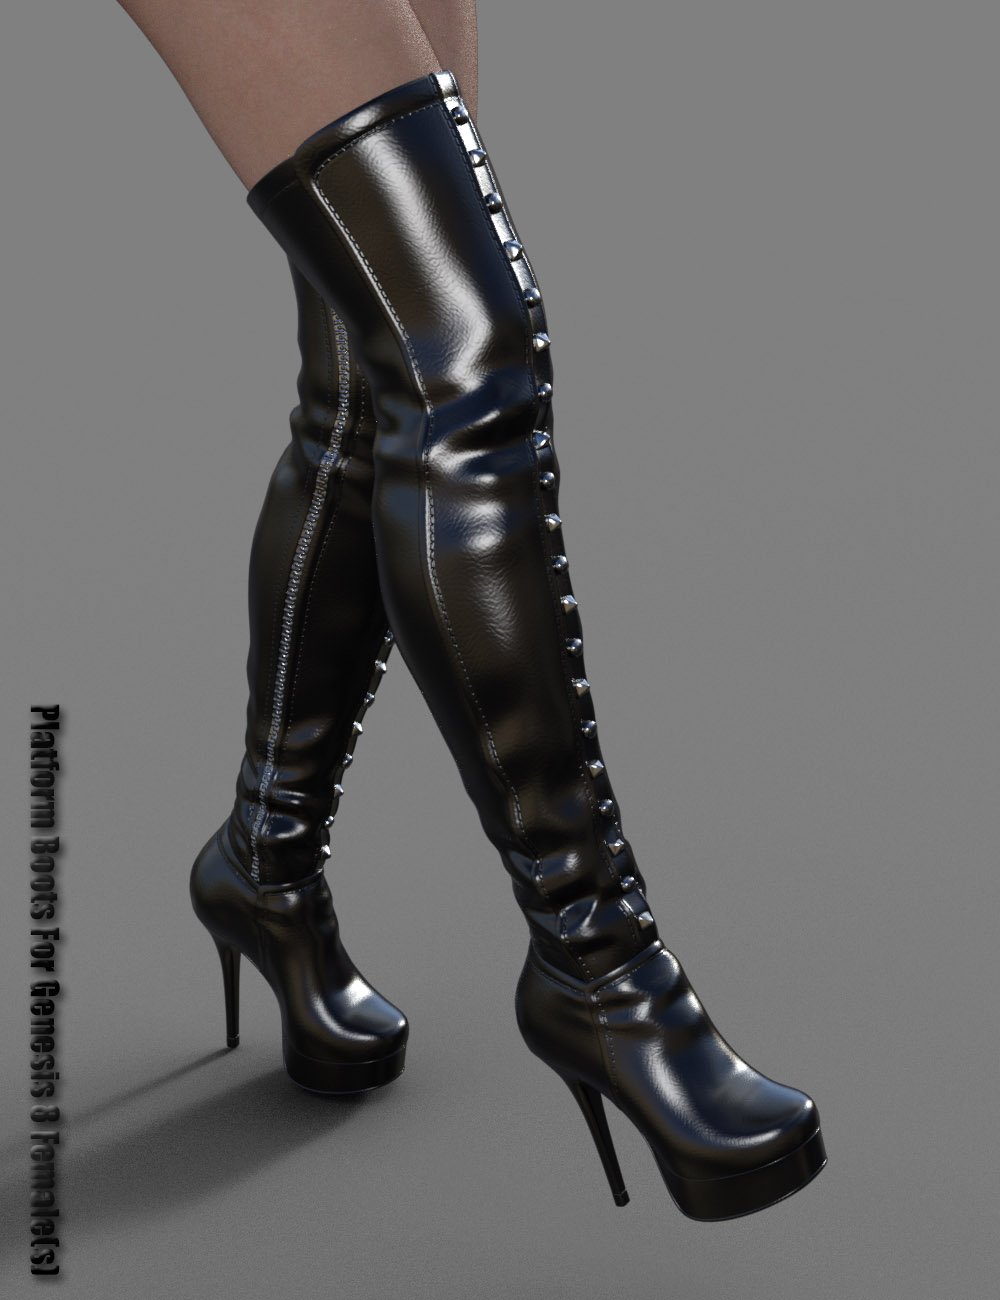 Platform Boots for Genesis 8 Female(s) by: dx30, 3D Models by Daz 3D